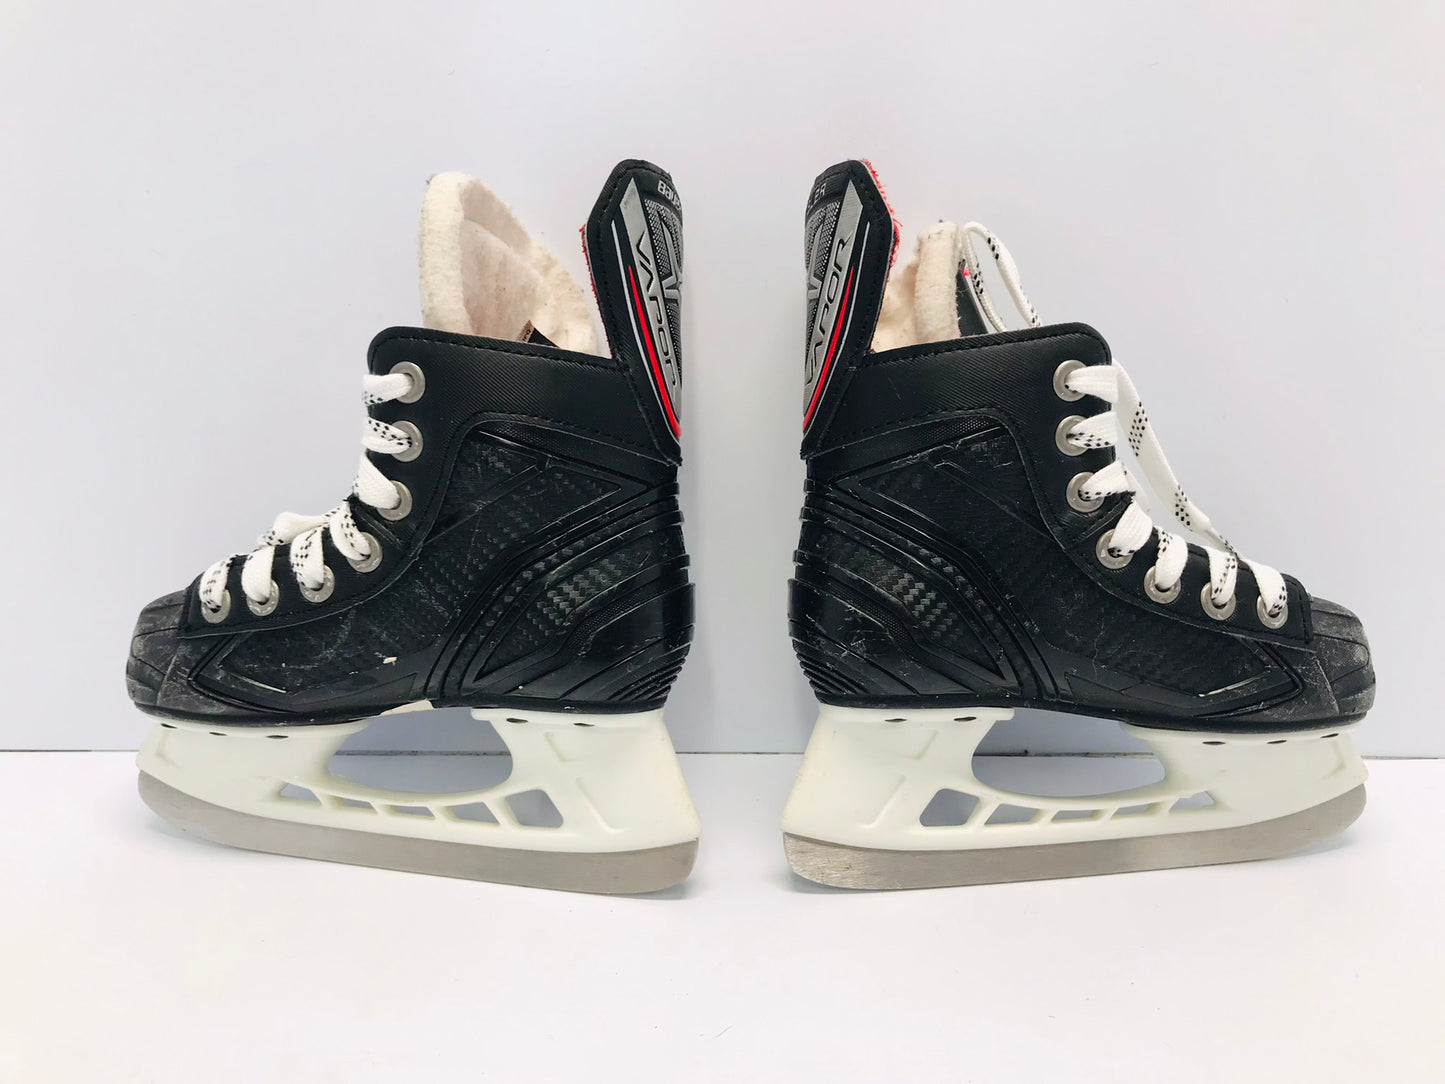 Hockey Skates Child Size 10 Shoe Size Toddler Bauer Vapor Excellent